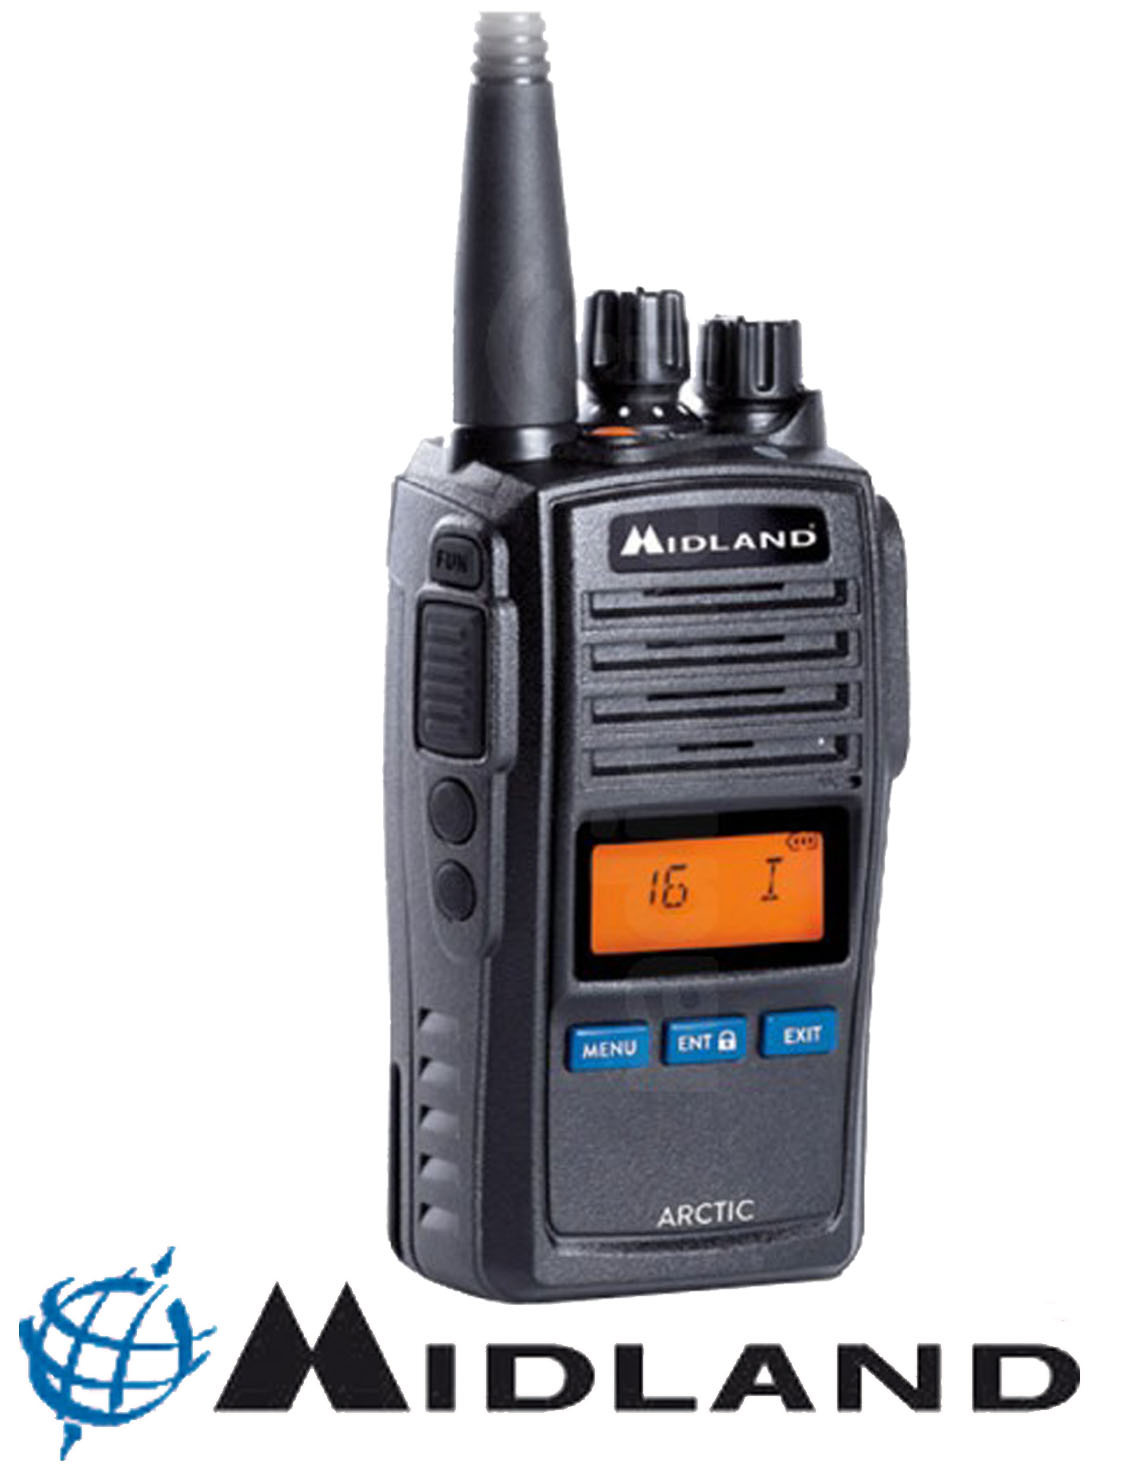 Midland ARCTIC Marine Boating VHF Two Way Radio